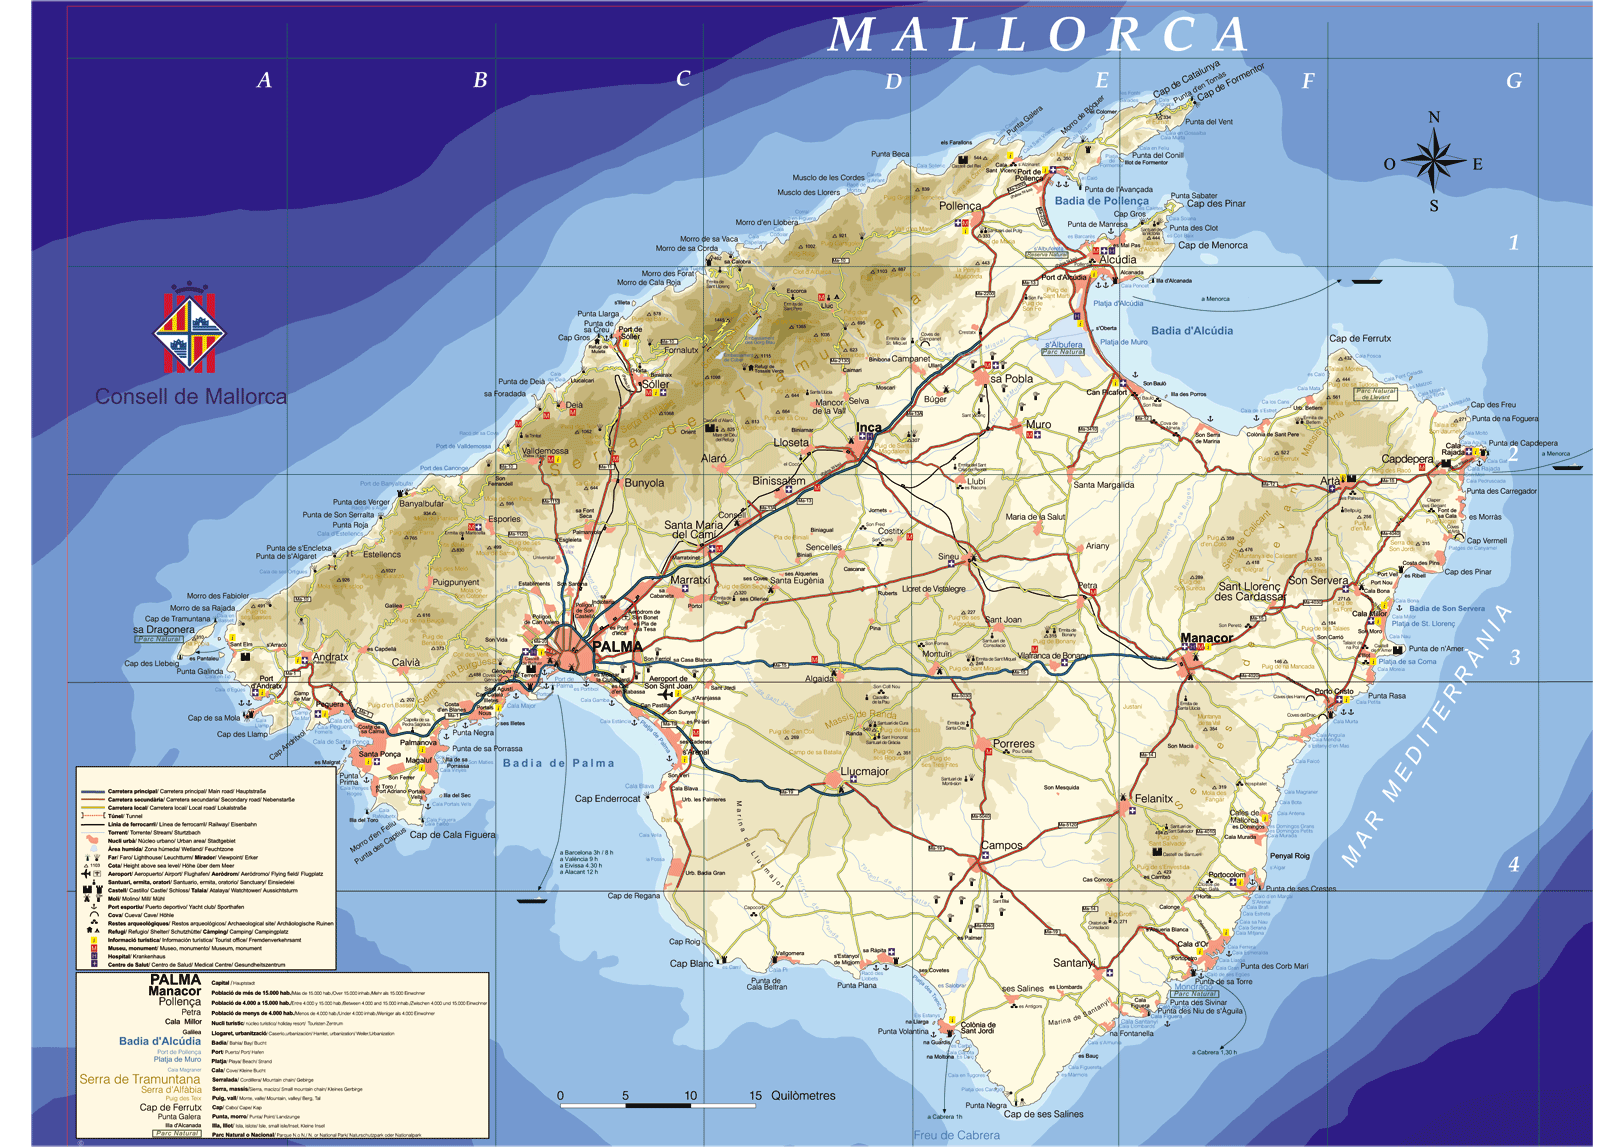 Mallorca road map